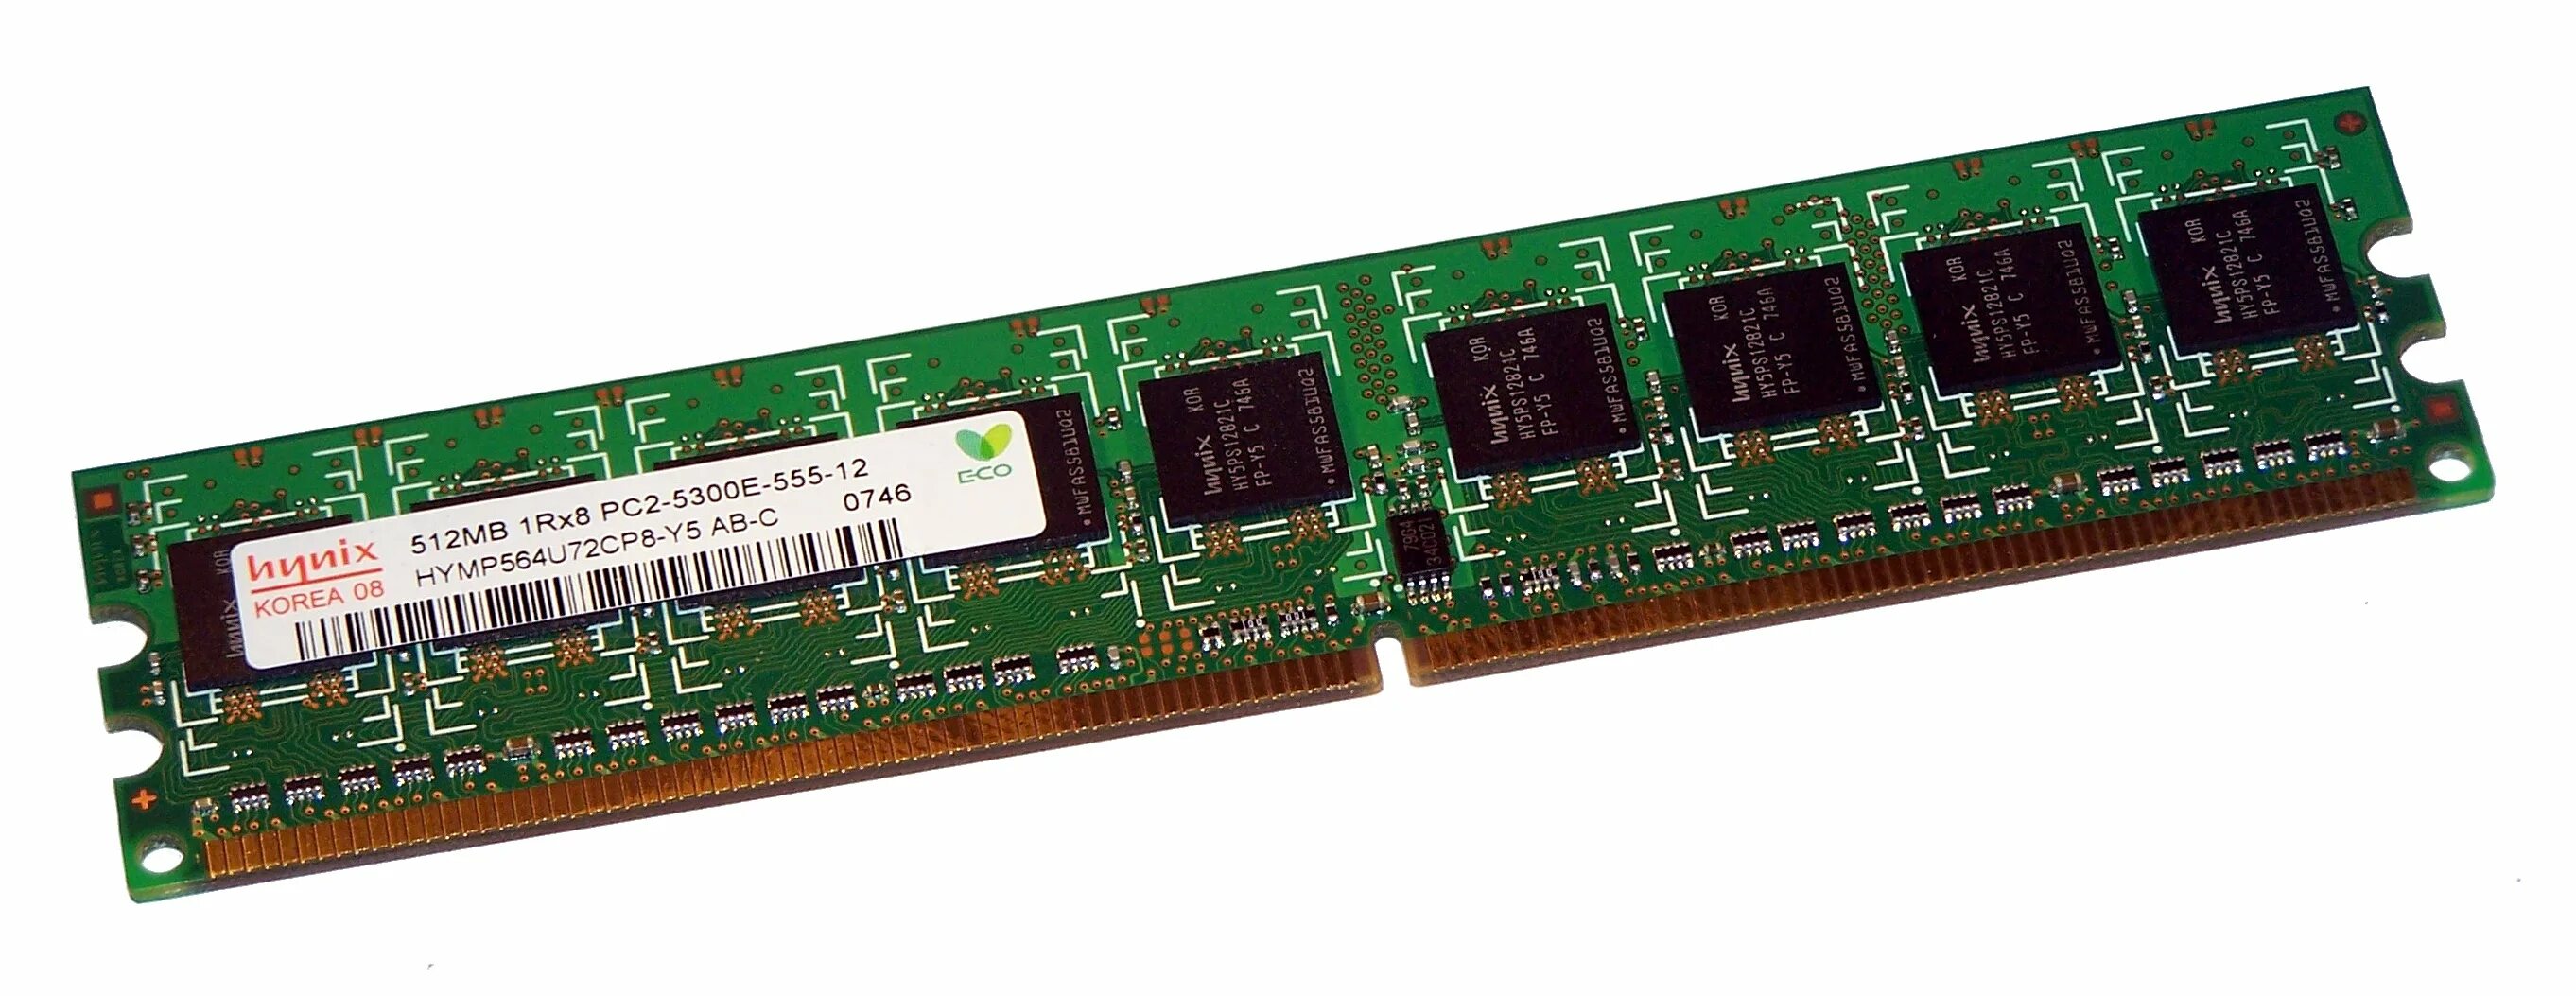 Ram e. DDR 512mb pc2-5300. Pc2-5300e. Hynix 512 МБ ddr2 533 МГЦ DIMM hymp564u64bp8-c4. Оперативная память 512 МБ 1 шт. Apacer ddr2 667 ECC DIMM 512mb cl5.